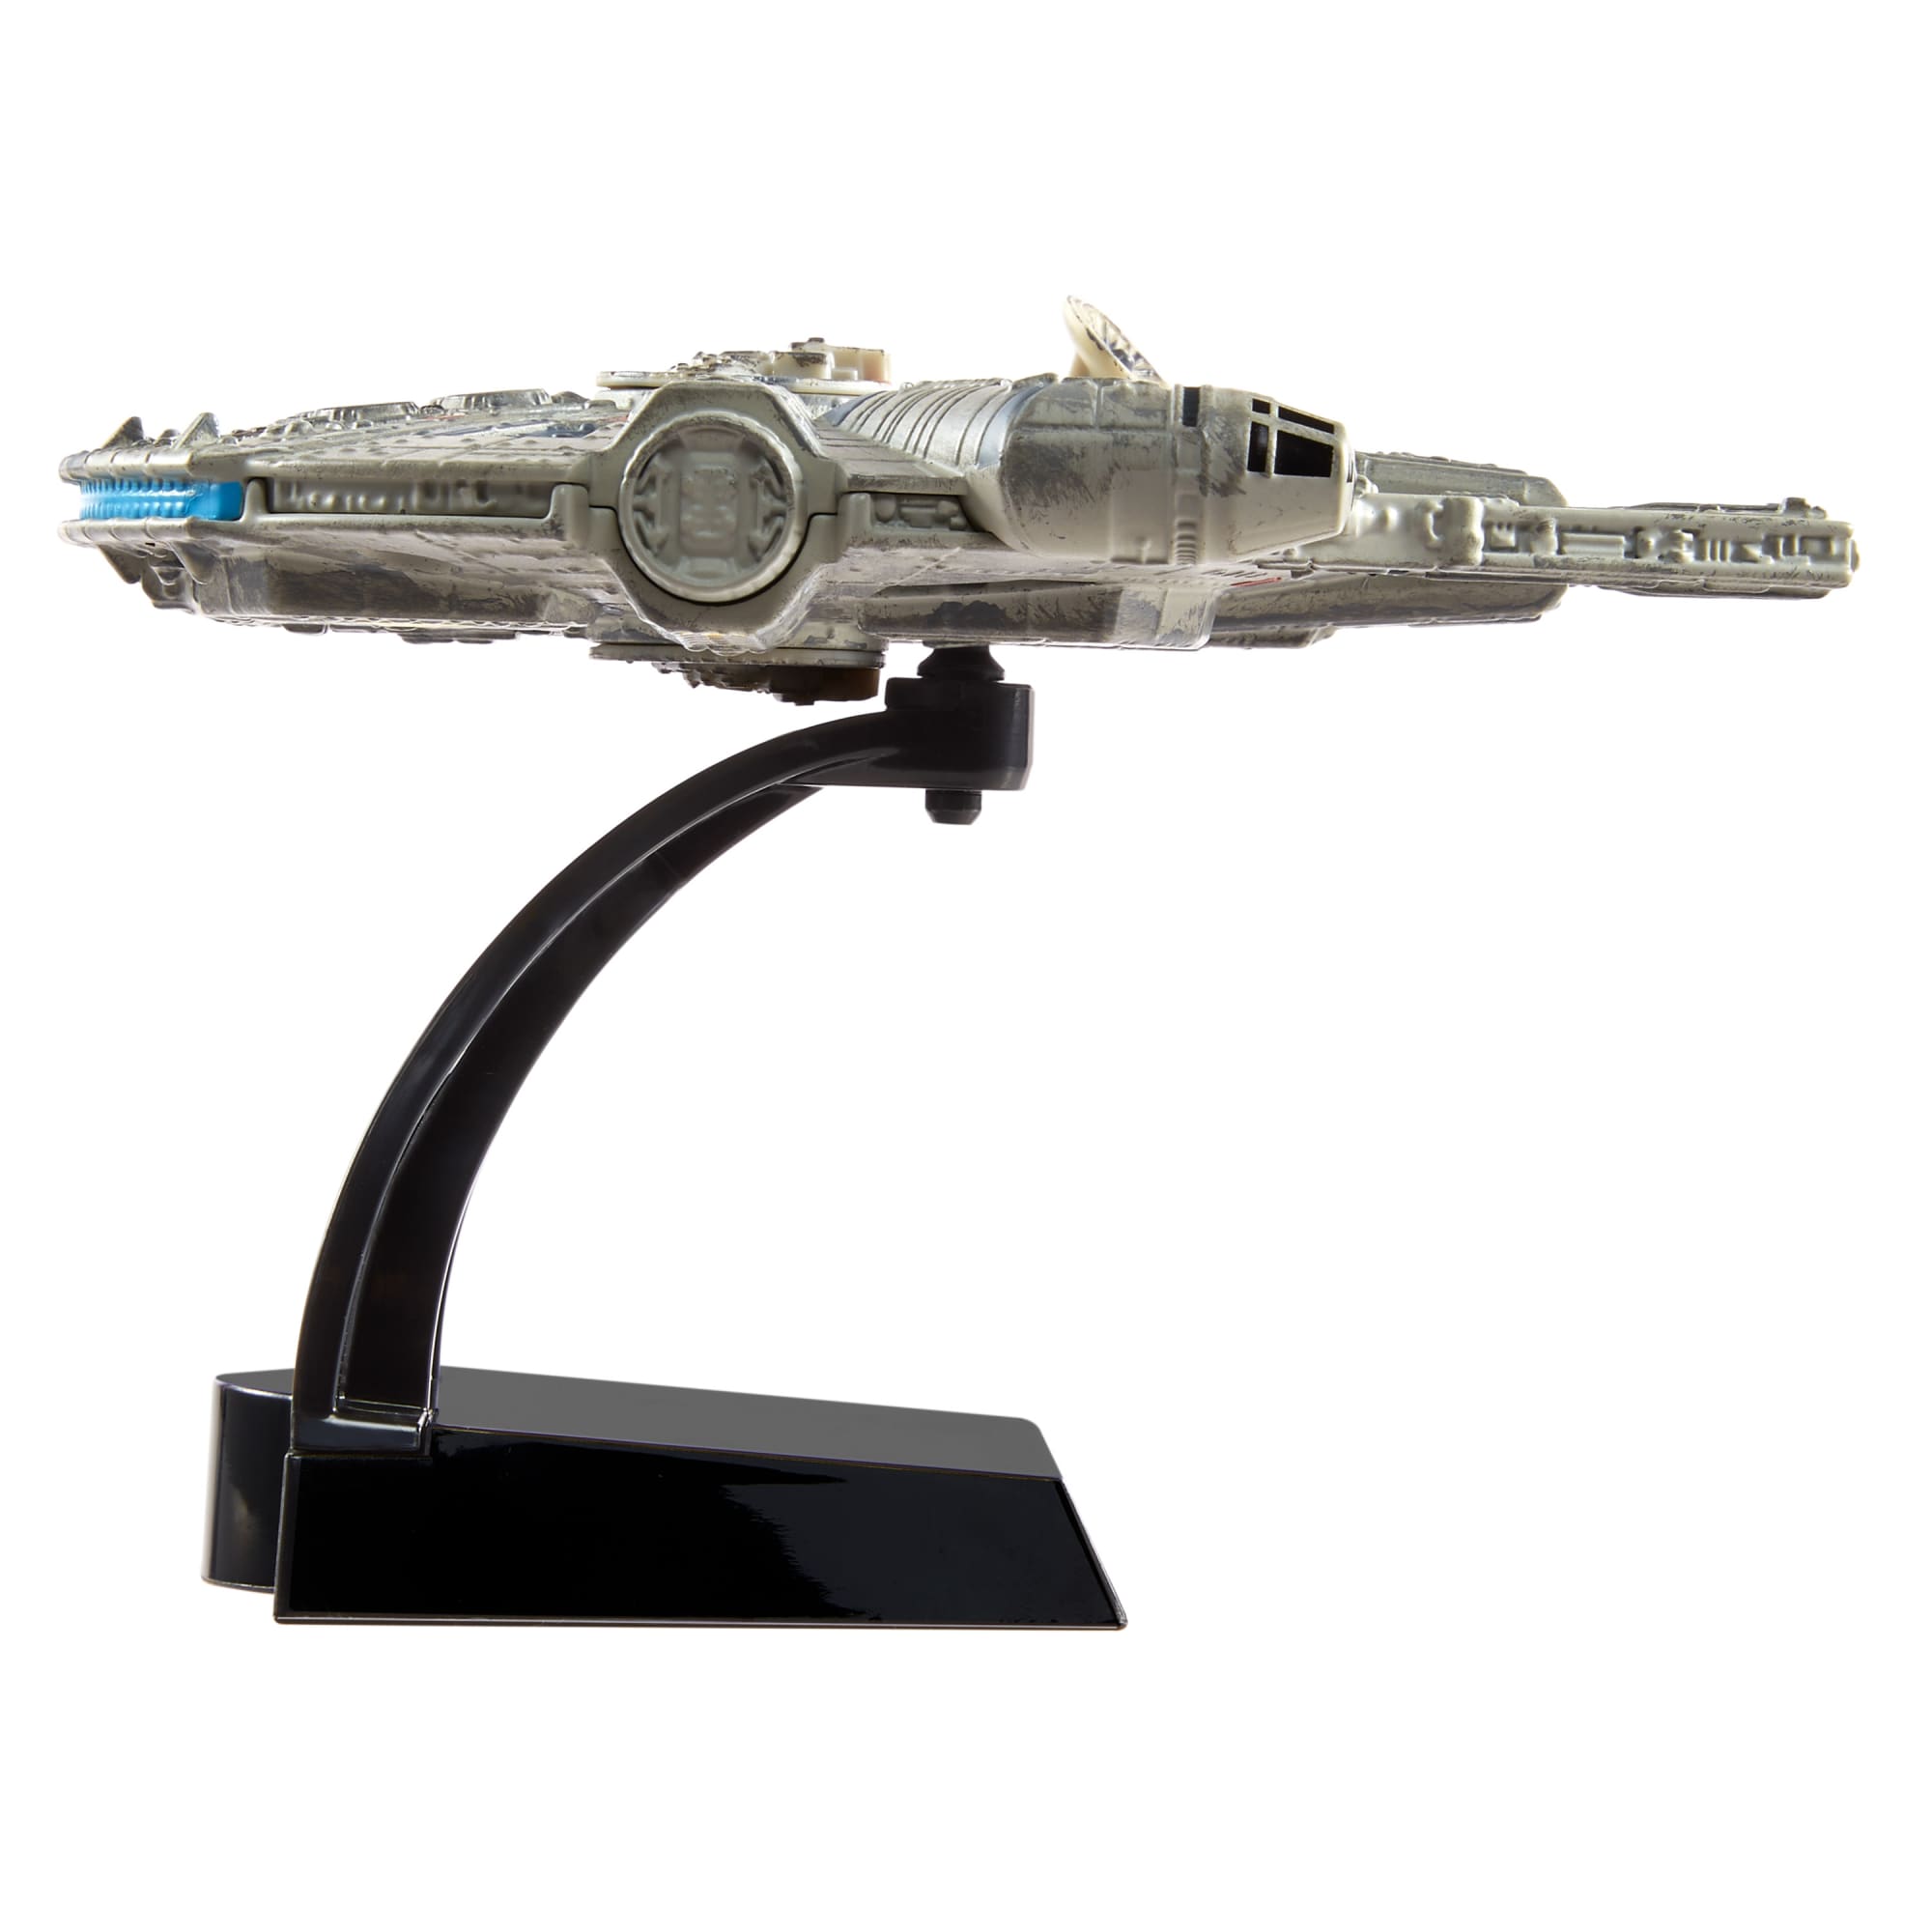 Hot Wheels Star Wars Starships Millennium Falcon Vehicle | Mattel